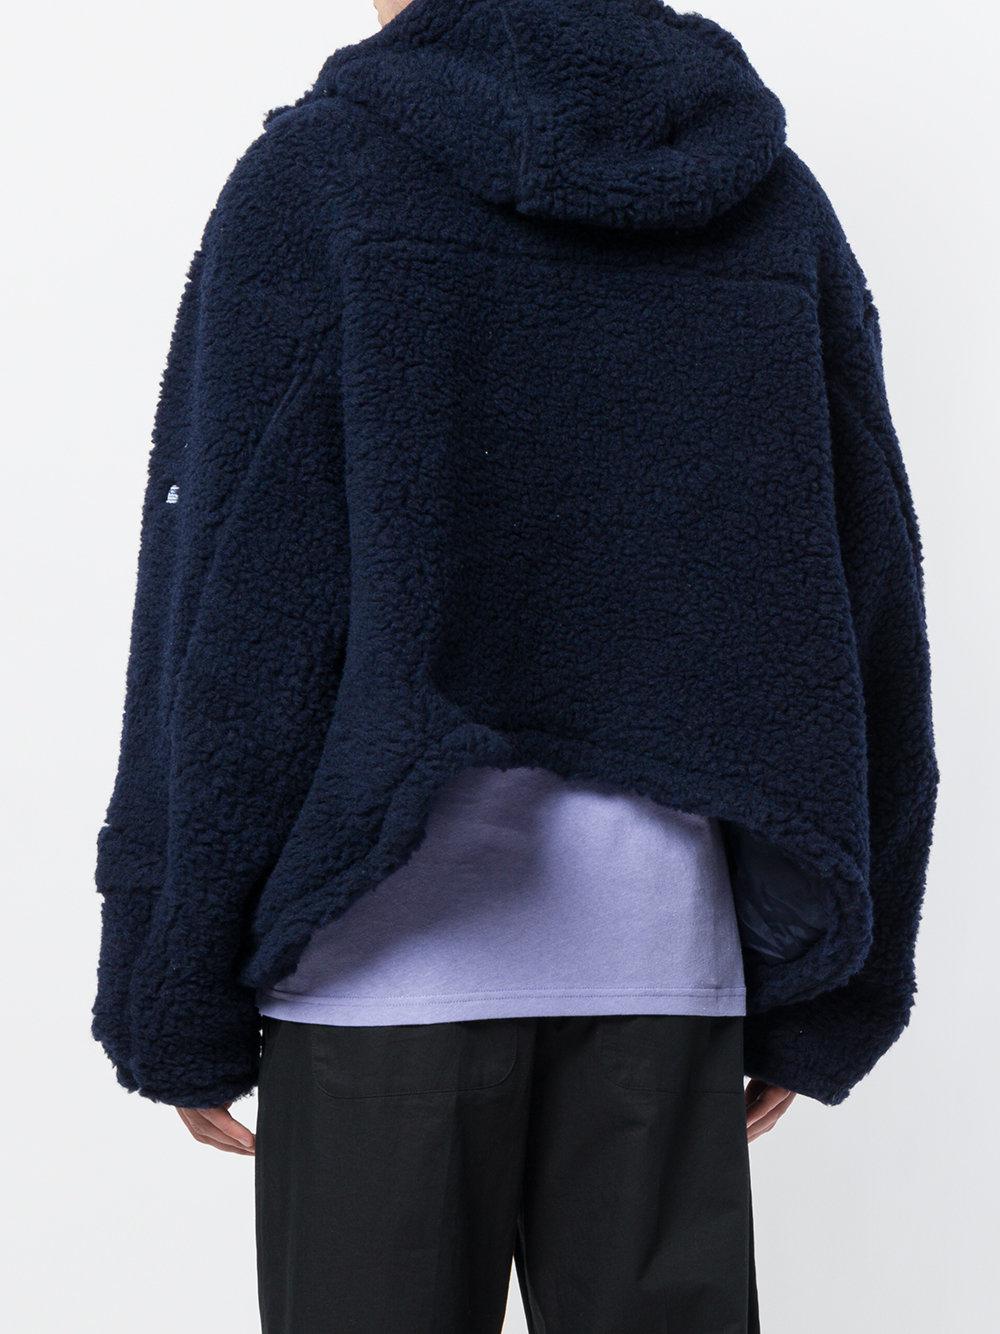 Martine Rose Oversized Fleece Jacket in Blue for Men - Lyst